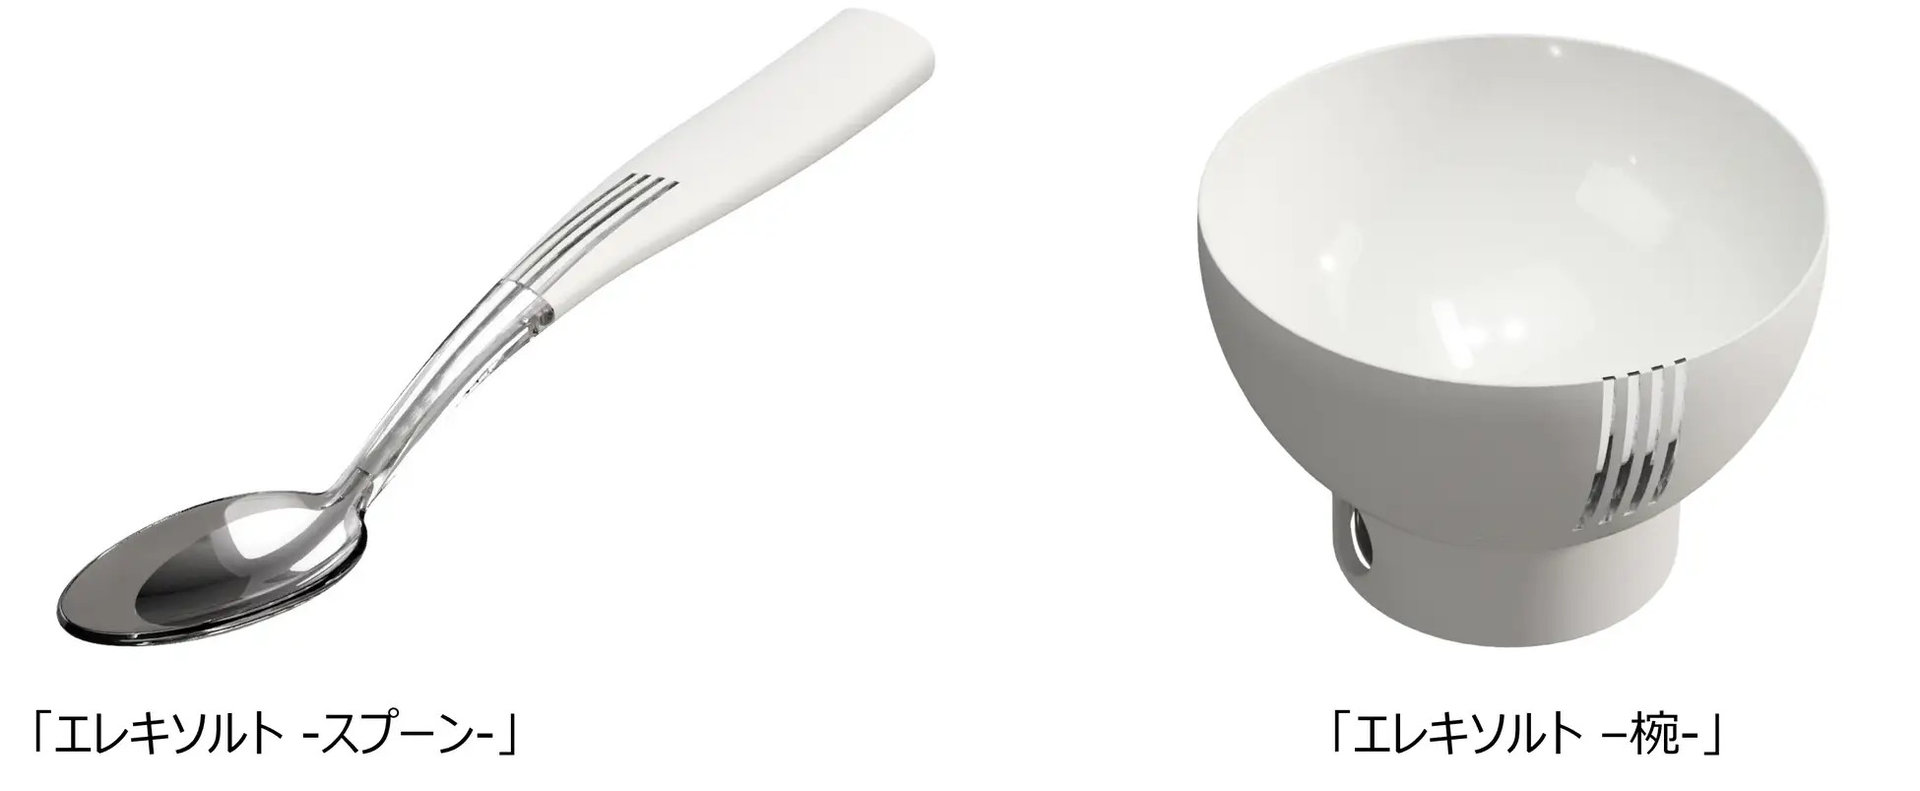 Kirin Holdings salty spoon and bowl